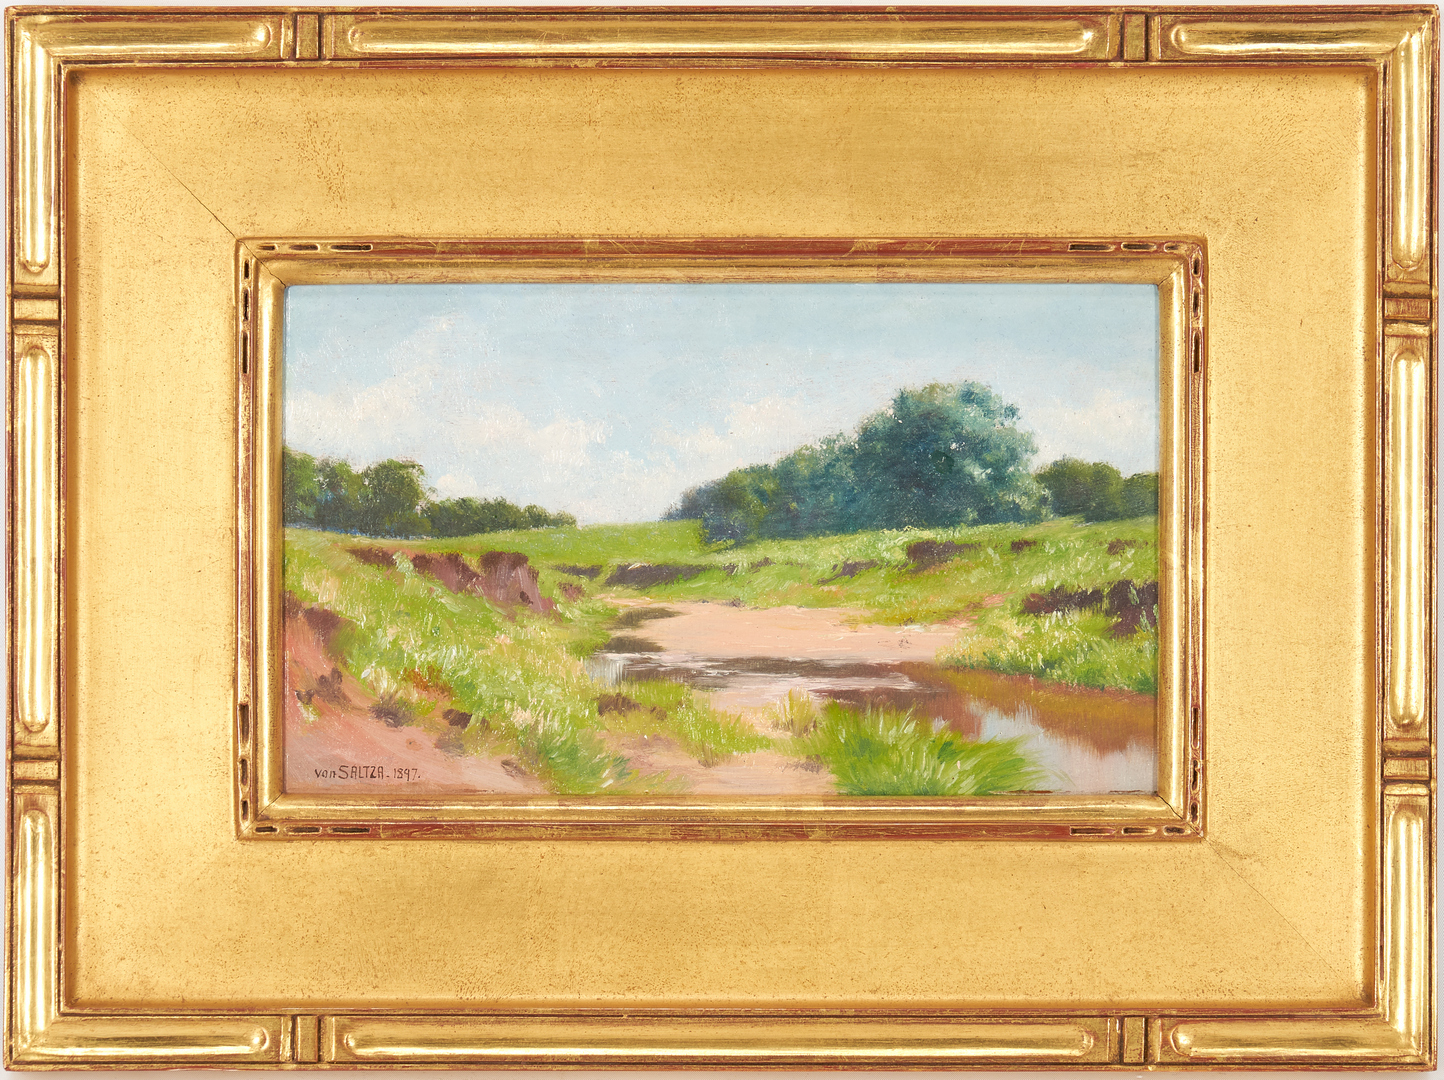 Lot 358: Charles Frederick Von Saltza O/B, Landscape Painting